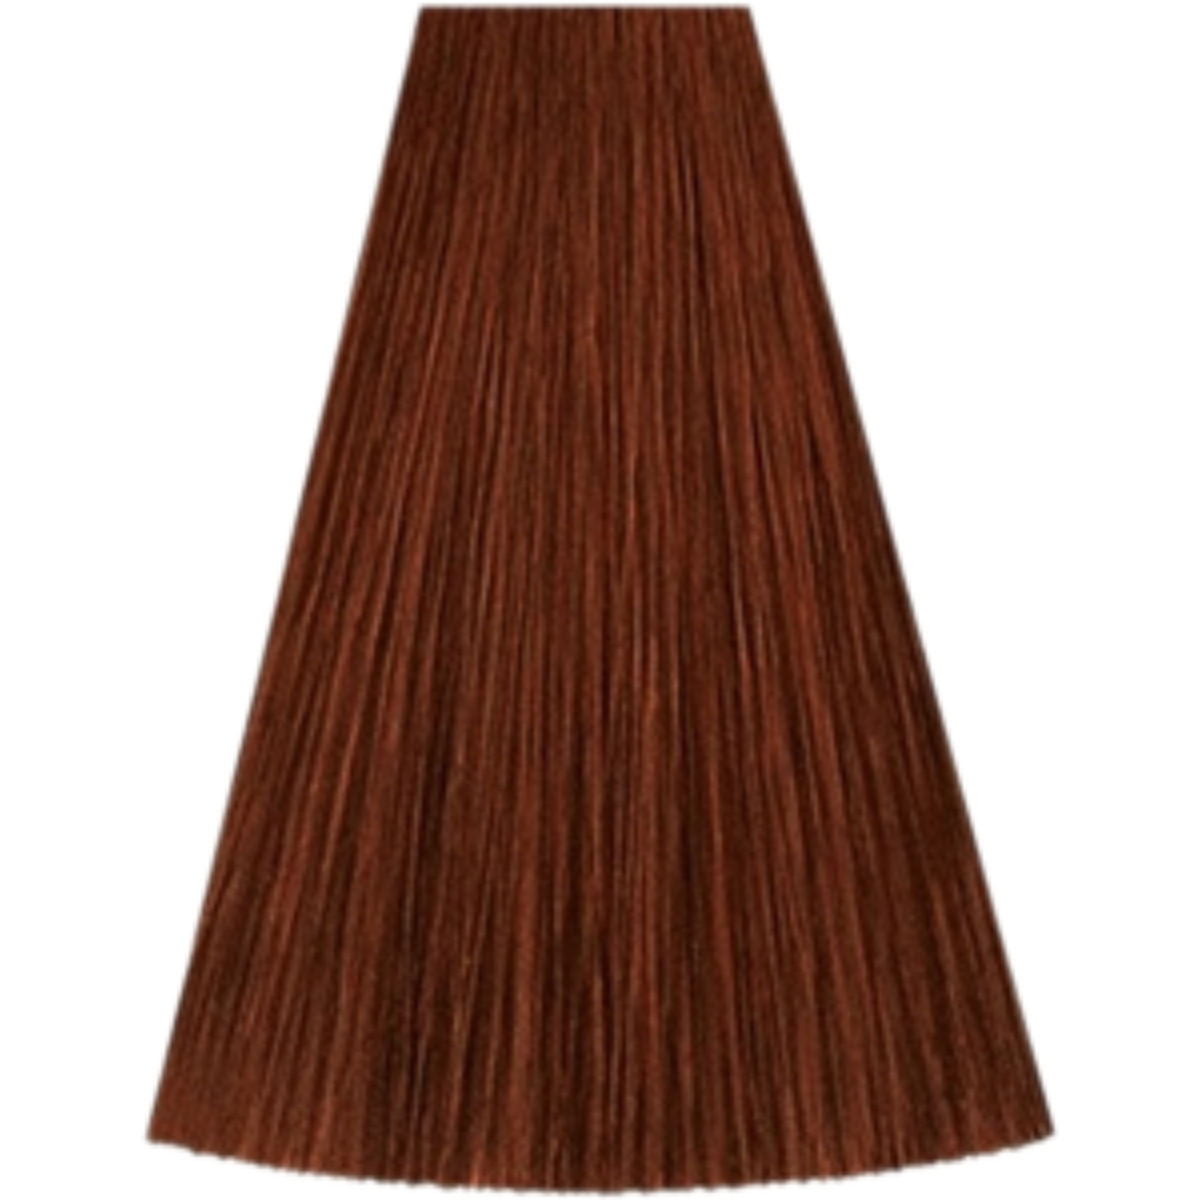 צבע שיער גוון 8/44 LIGHT BLONDE INTENSE RED קאדוס KADUS צבע לשיער 60 גרם